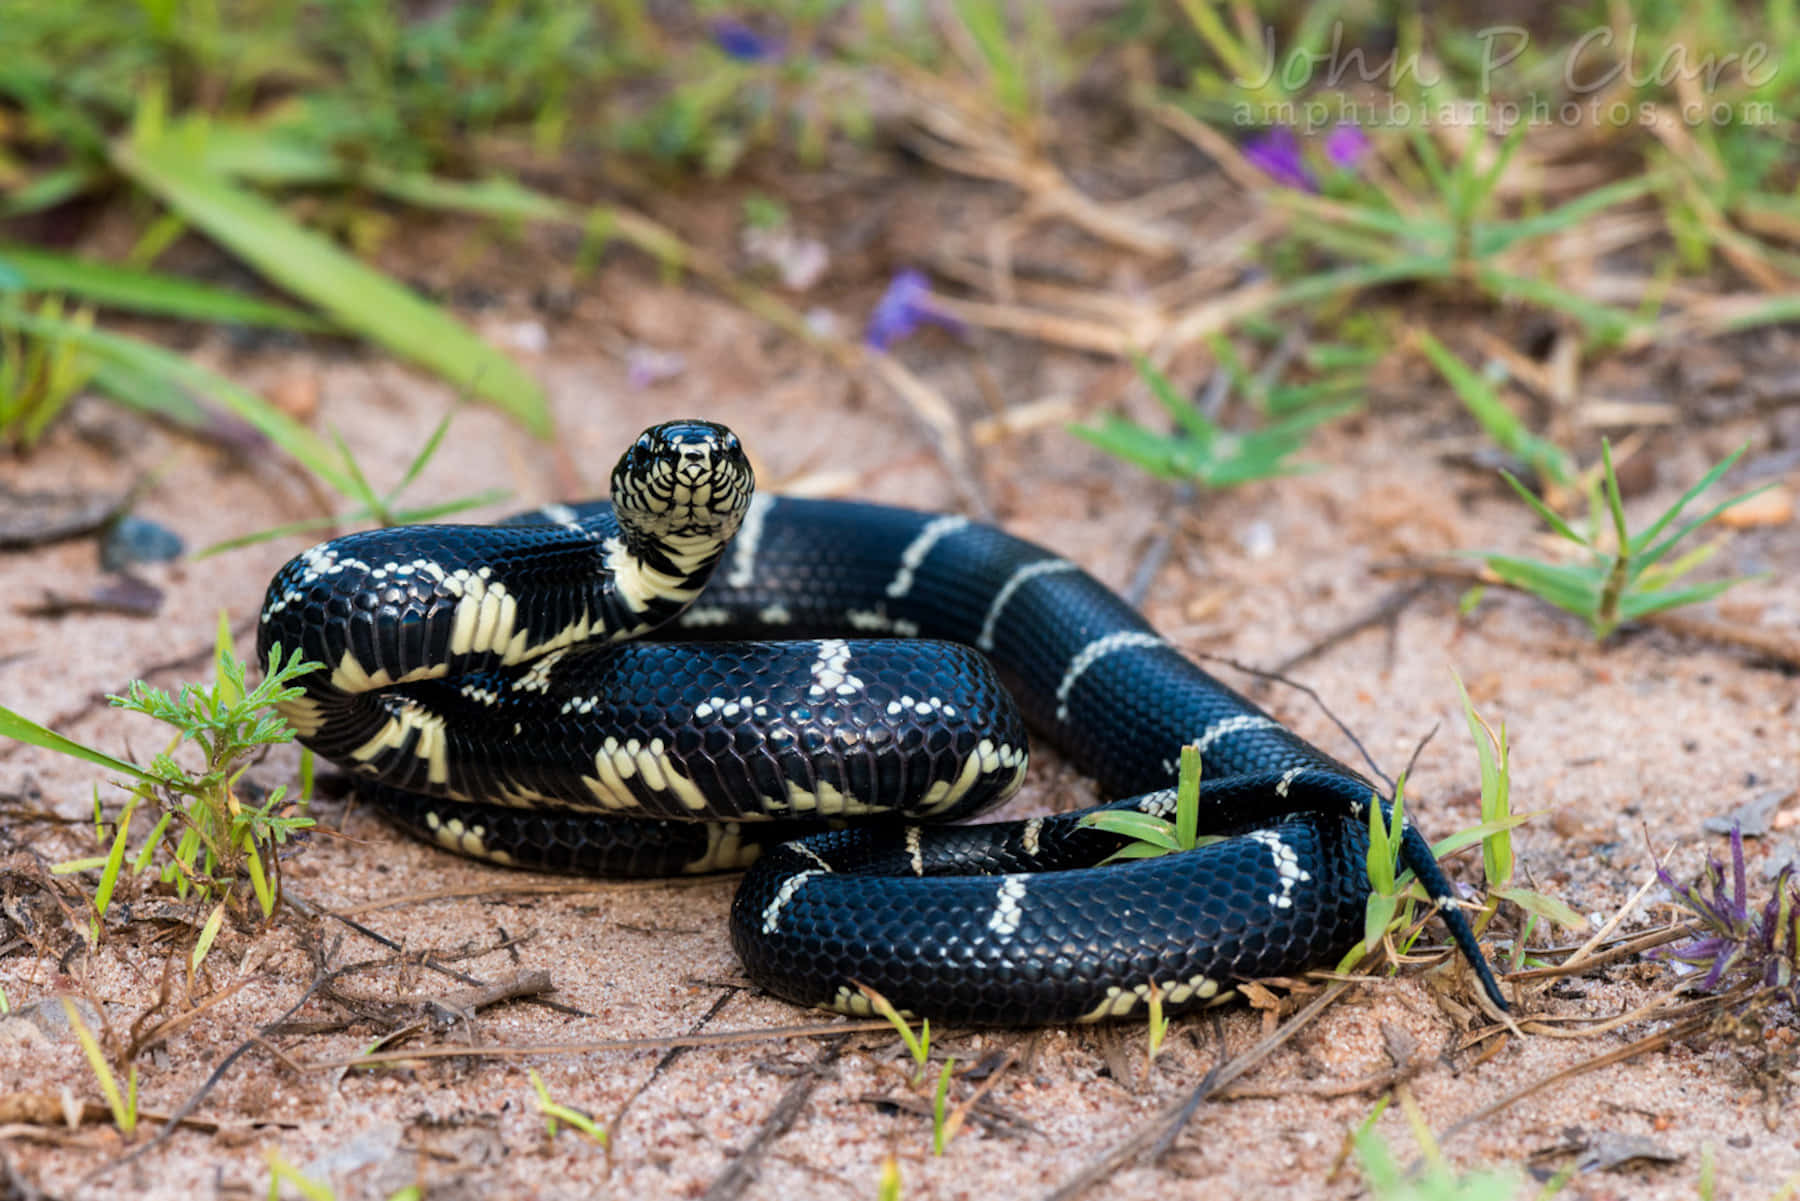 Get a close look at a beautiful King Snake